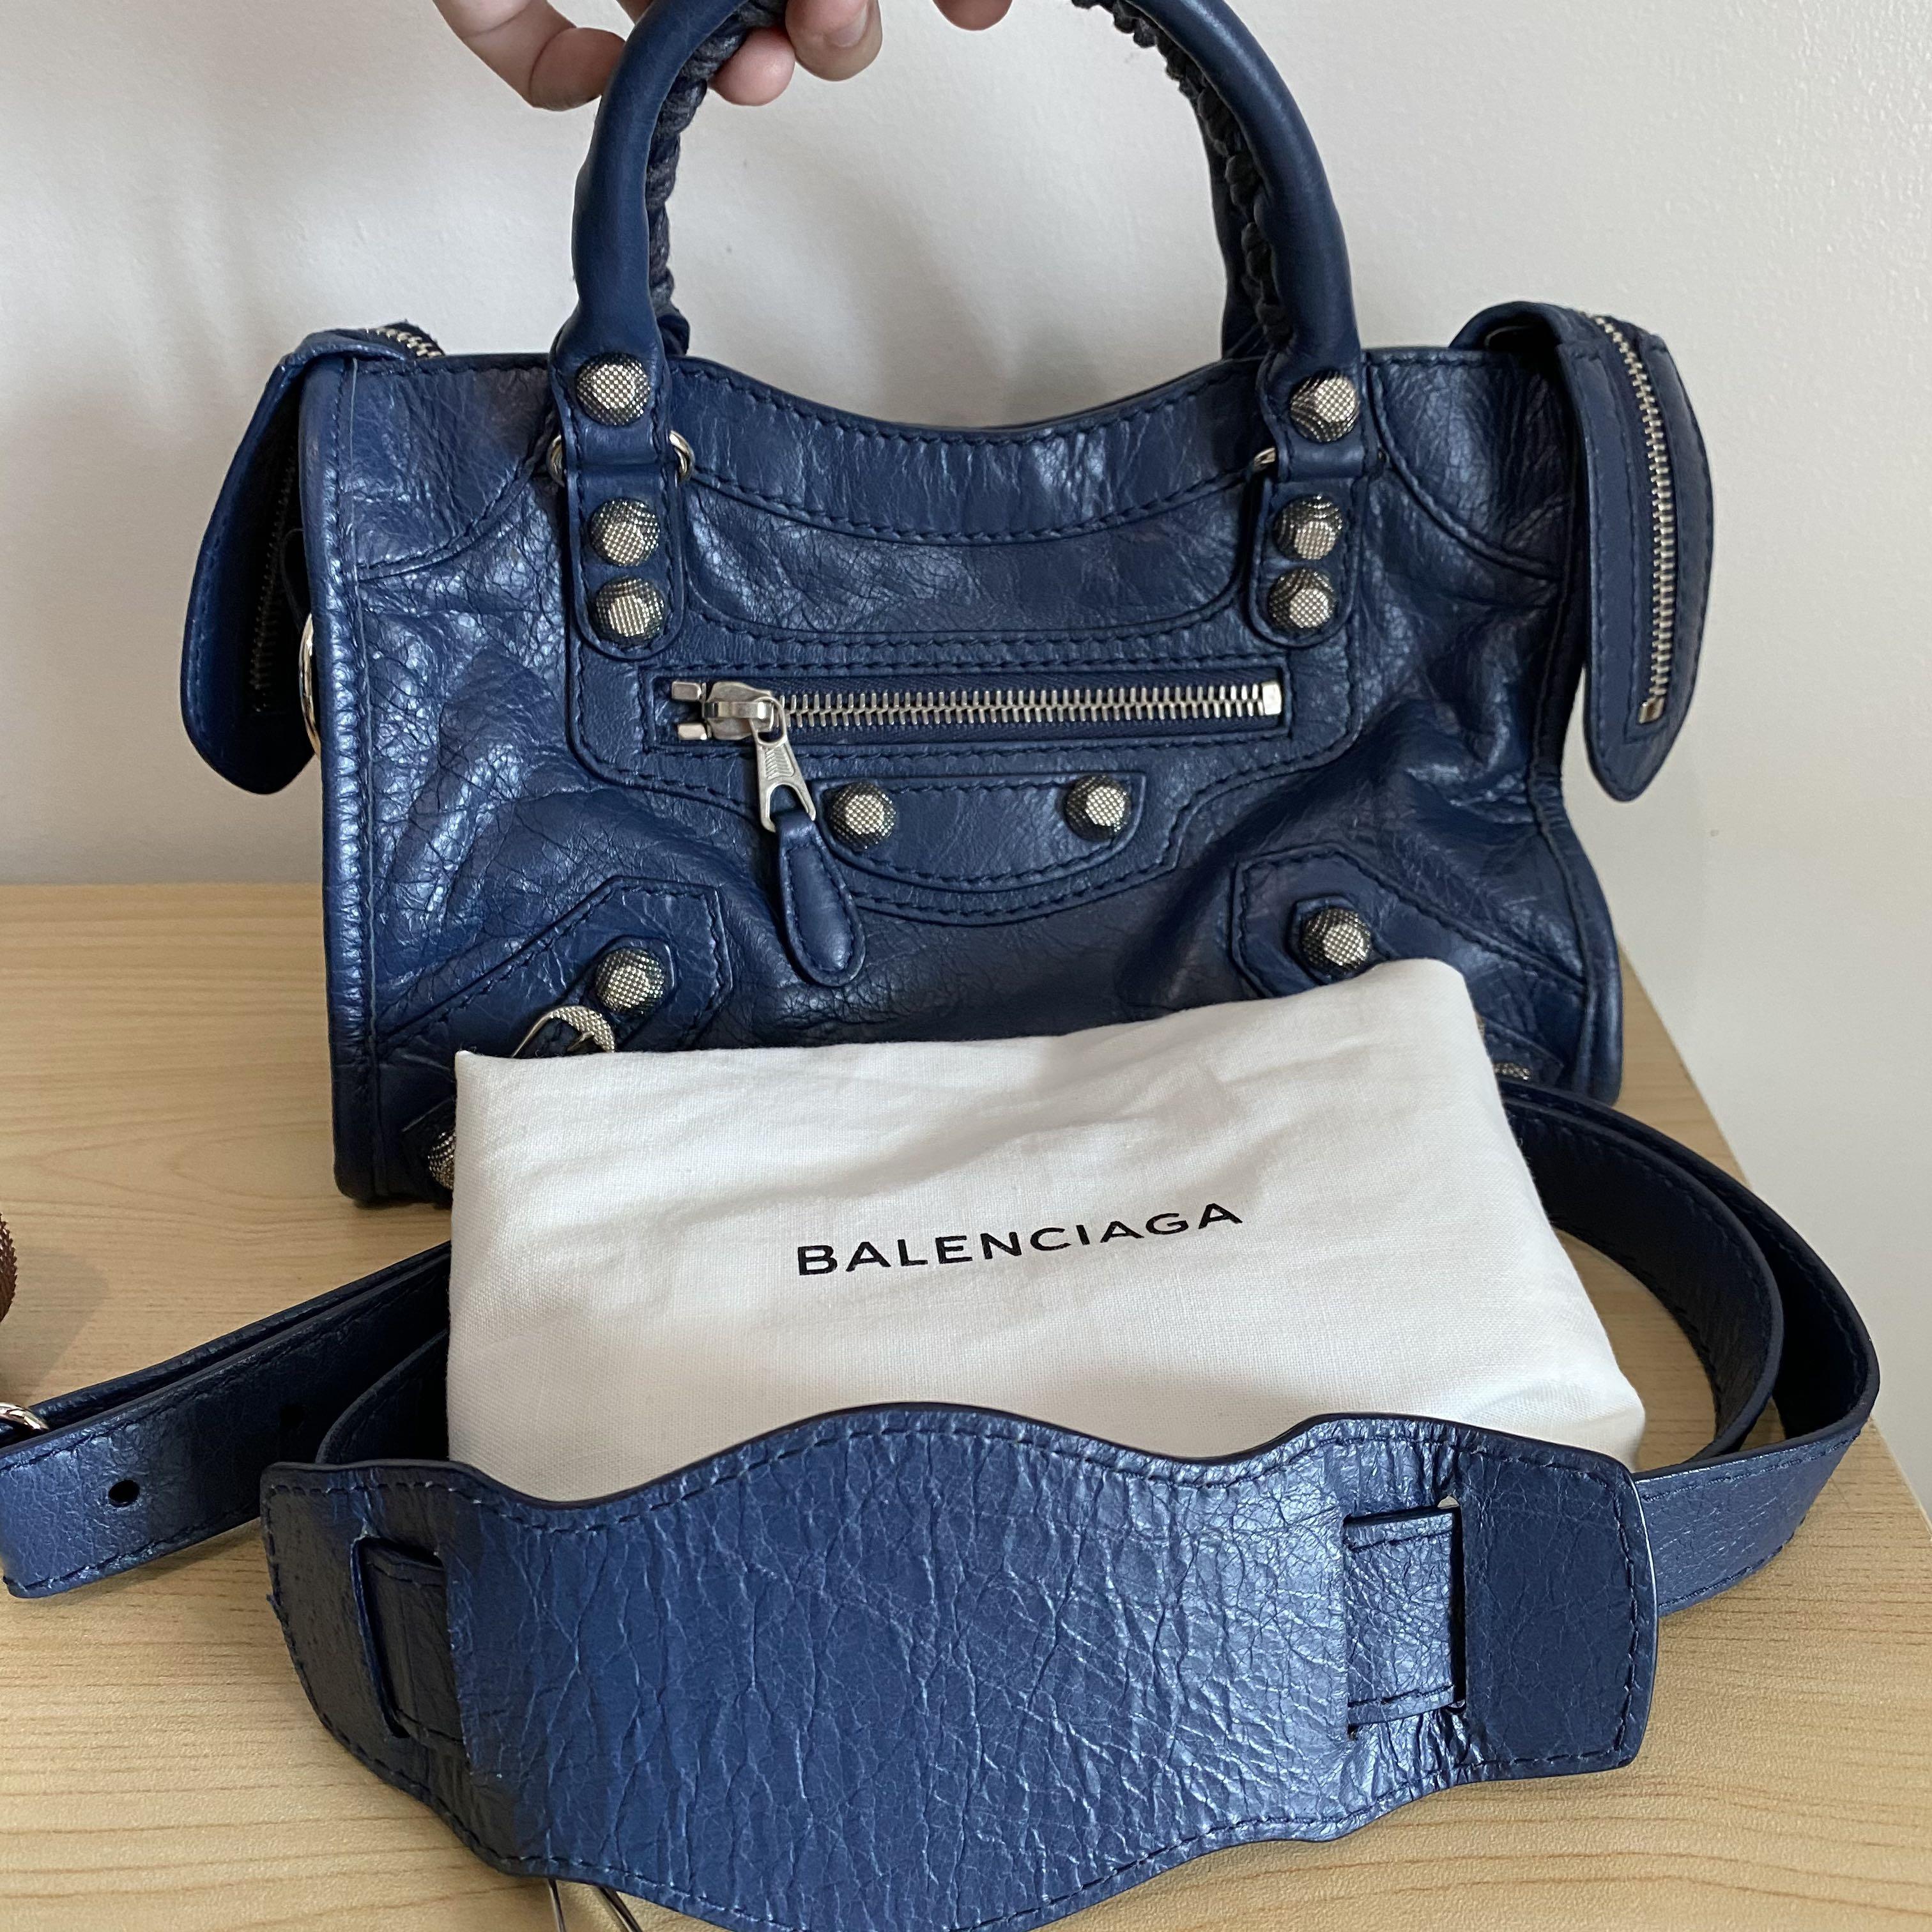 Balenciaga Town Bag with Mini Giant Hardware. Similar dimensions